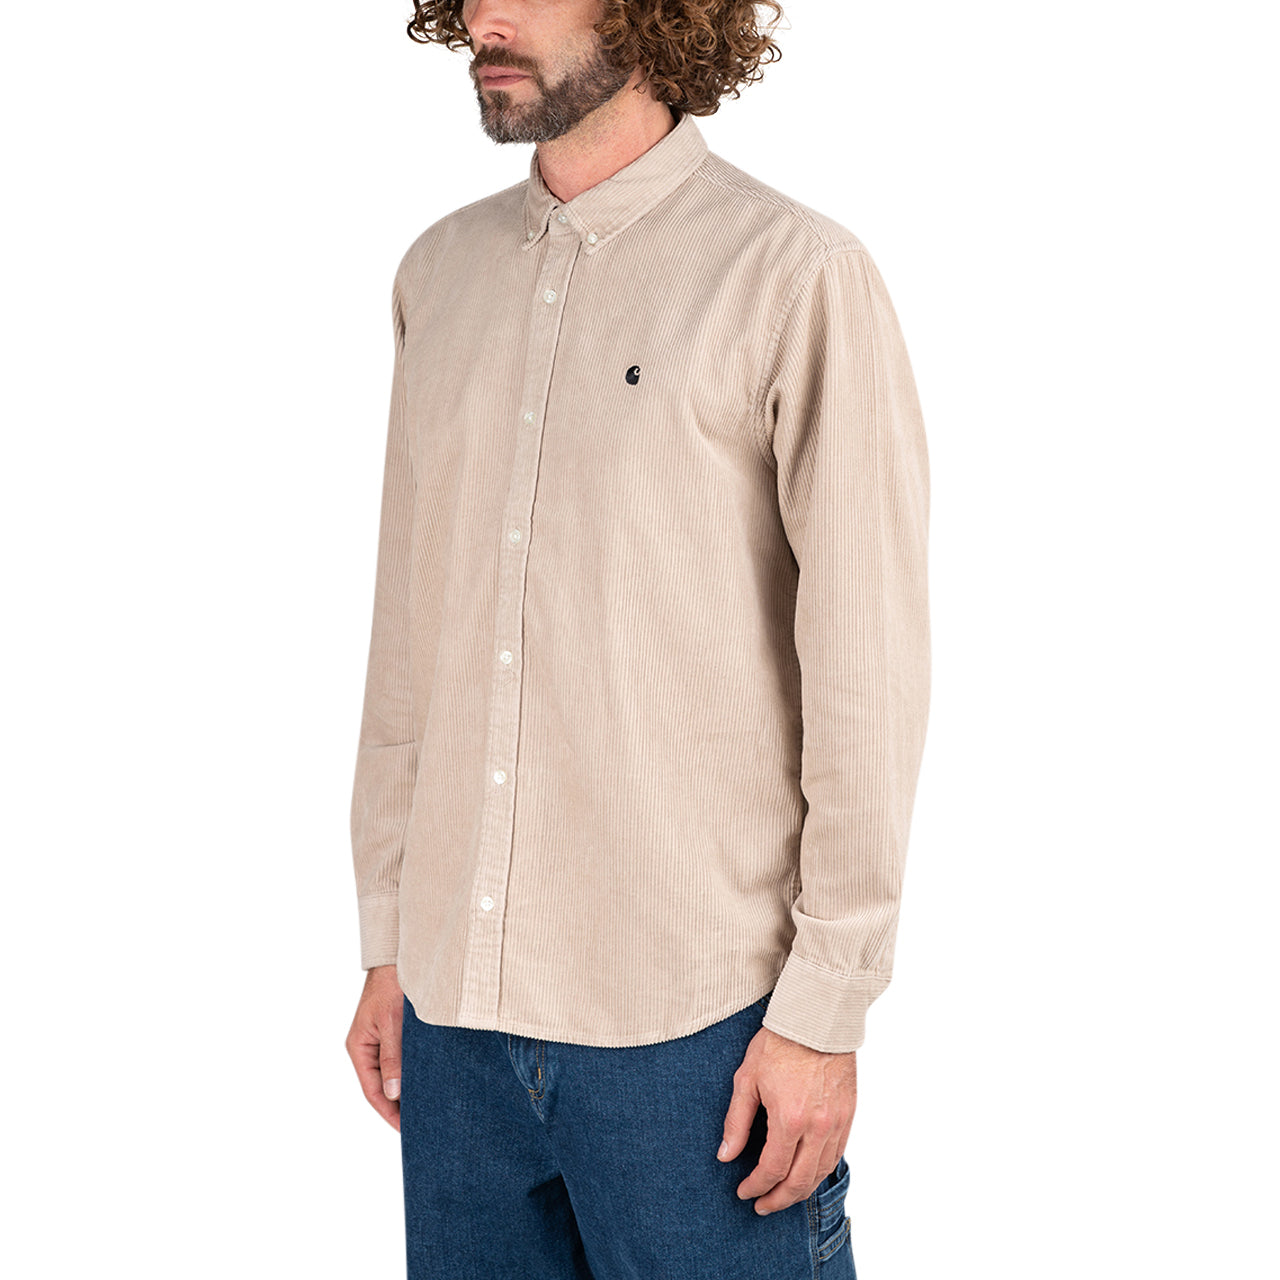 Carhartt WIP Longsleeve Madison Cord Shirt (Beige)  - Allike Store